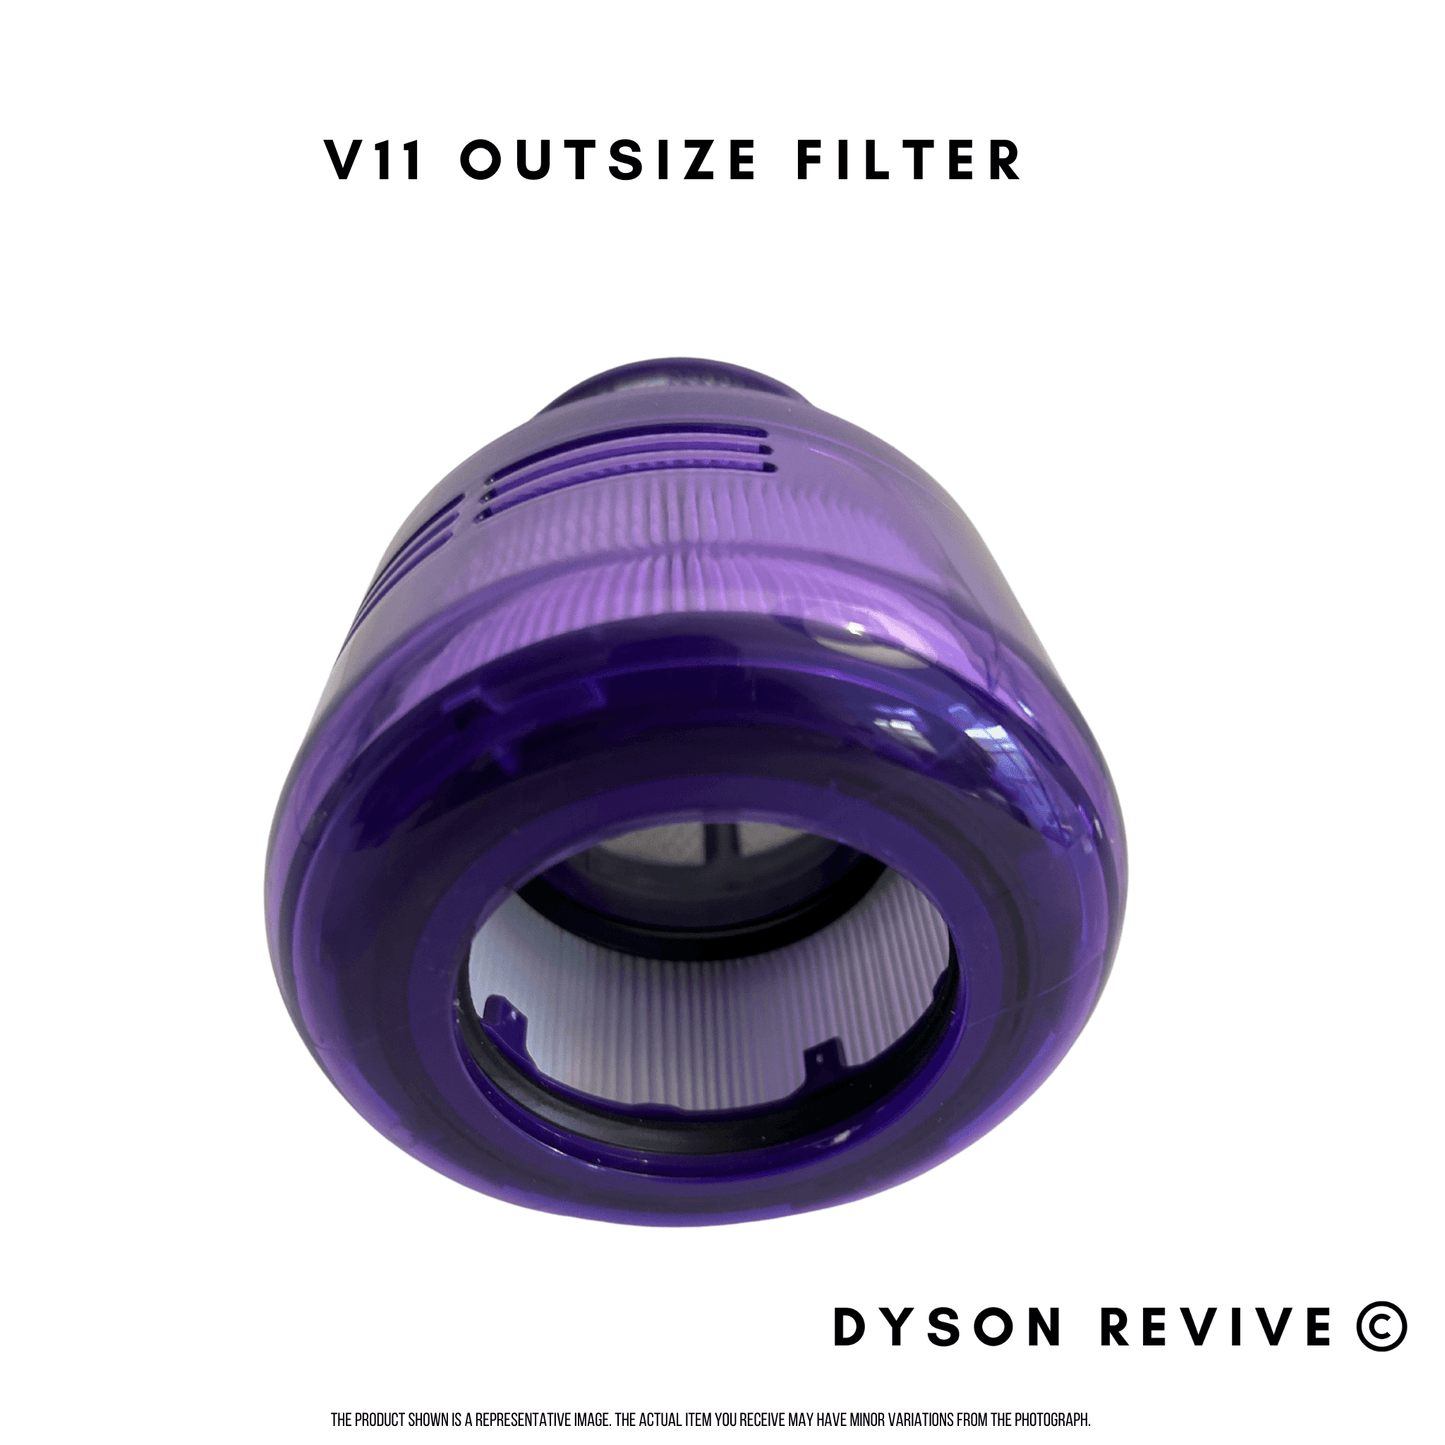 Brand New Compatible Dyson V11 Outsize Filter - Dyson Revive